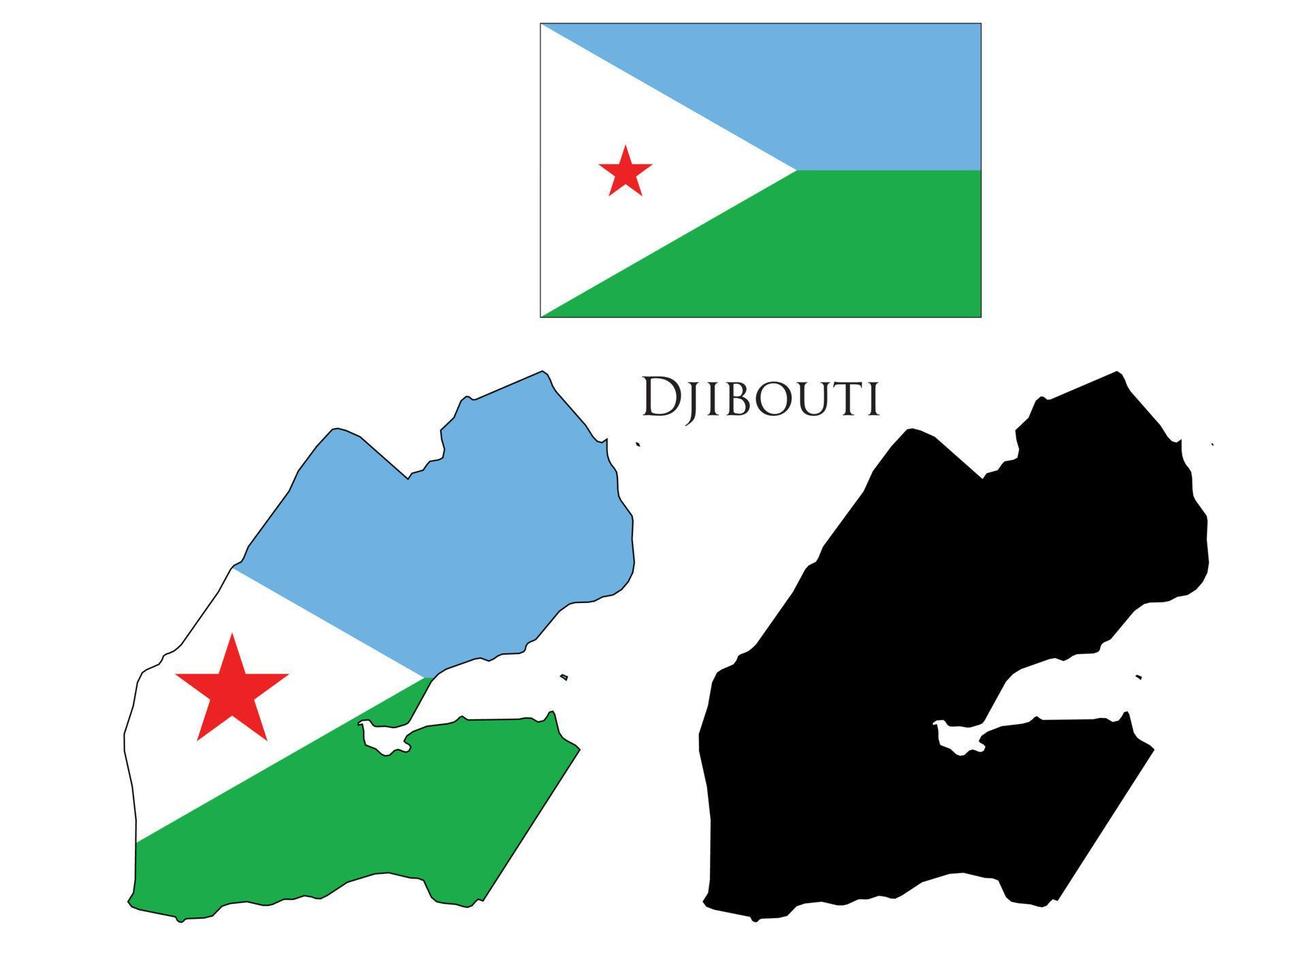 djibouti flag and map illustration vector